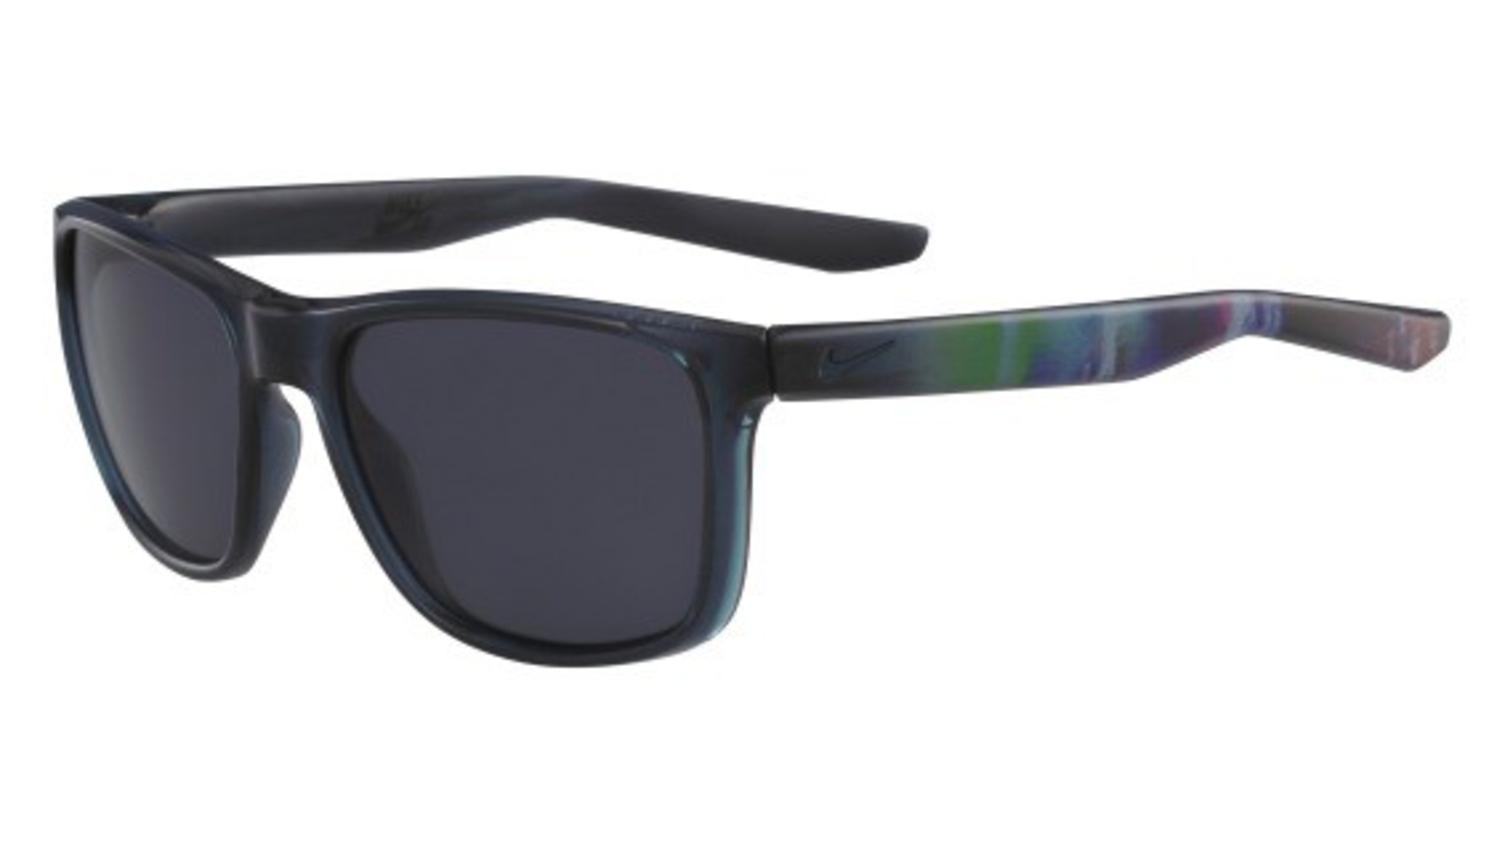 Nike Unrest Men's Unisex Rectangular Sunglasses, Crystal Midnight Teal/Hollywood - image 1 of 3